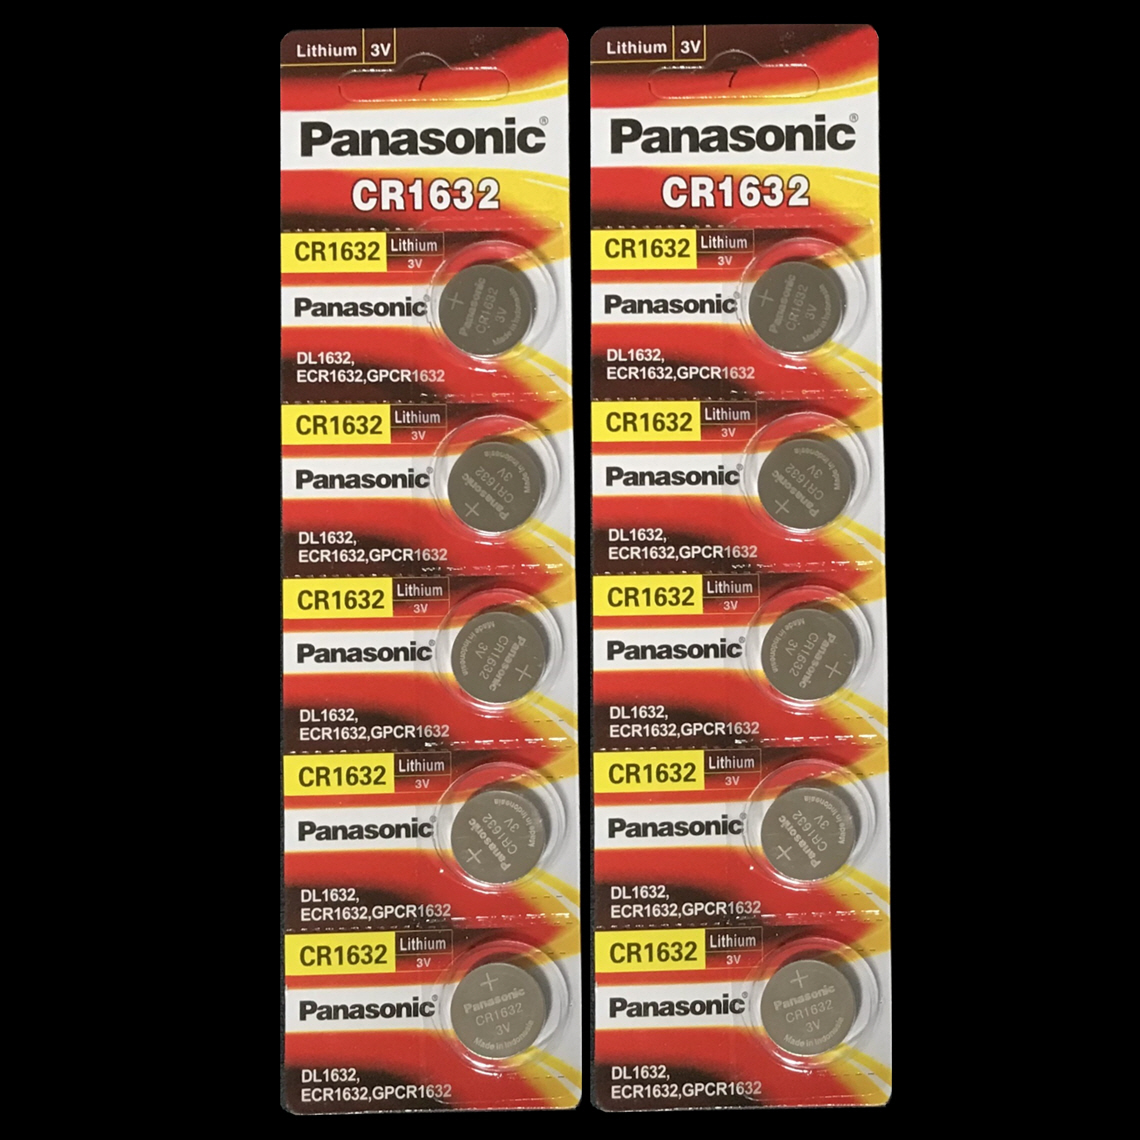 Panasonic CR1632 10個 送料無料 パナソニック ボタン電池 リモートキー 激安卸販売新品 コイン電池 リチウム電池 スマートキー 交換用 出産祝いなども豊富